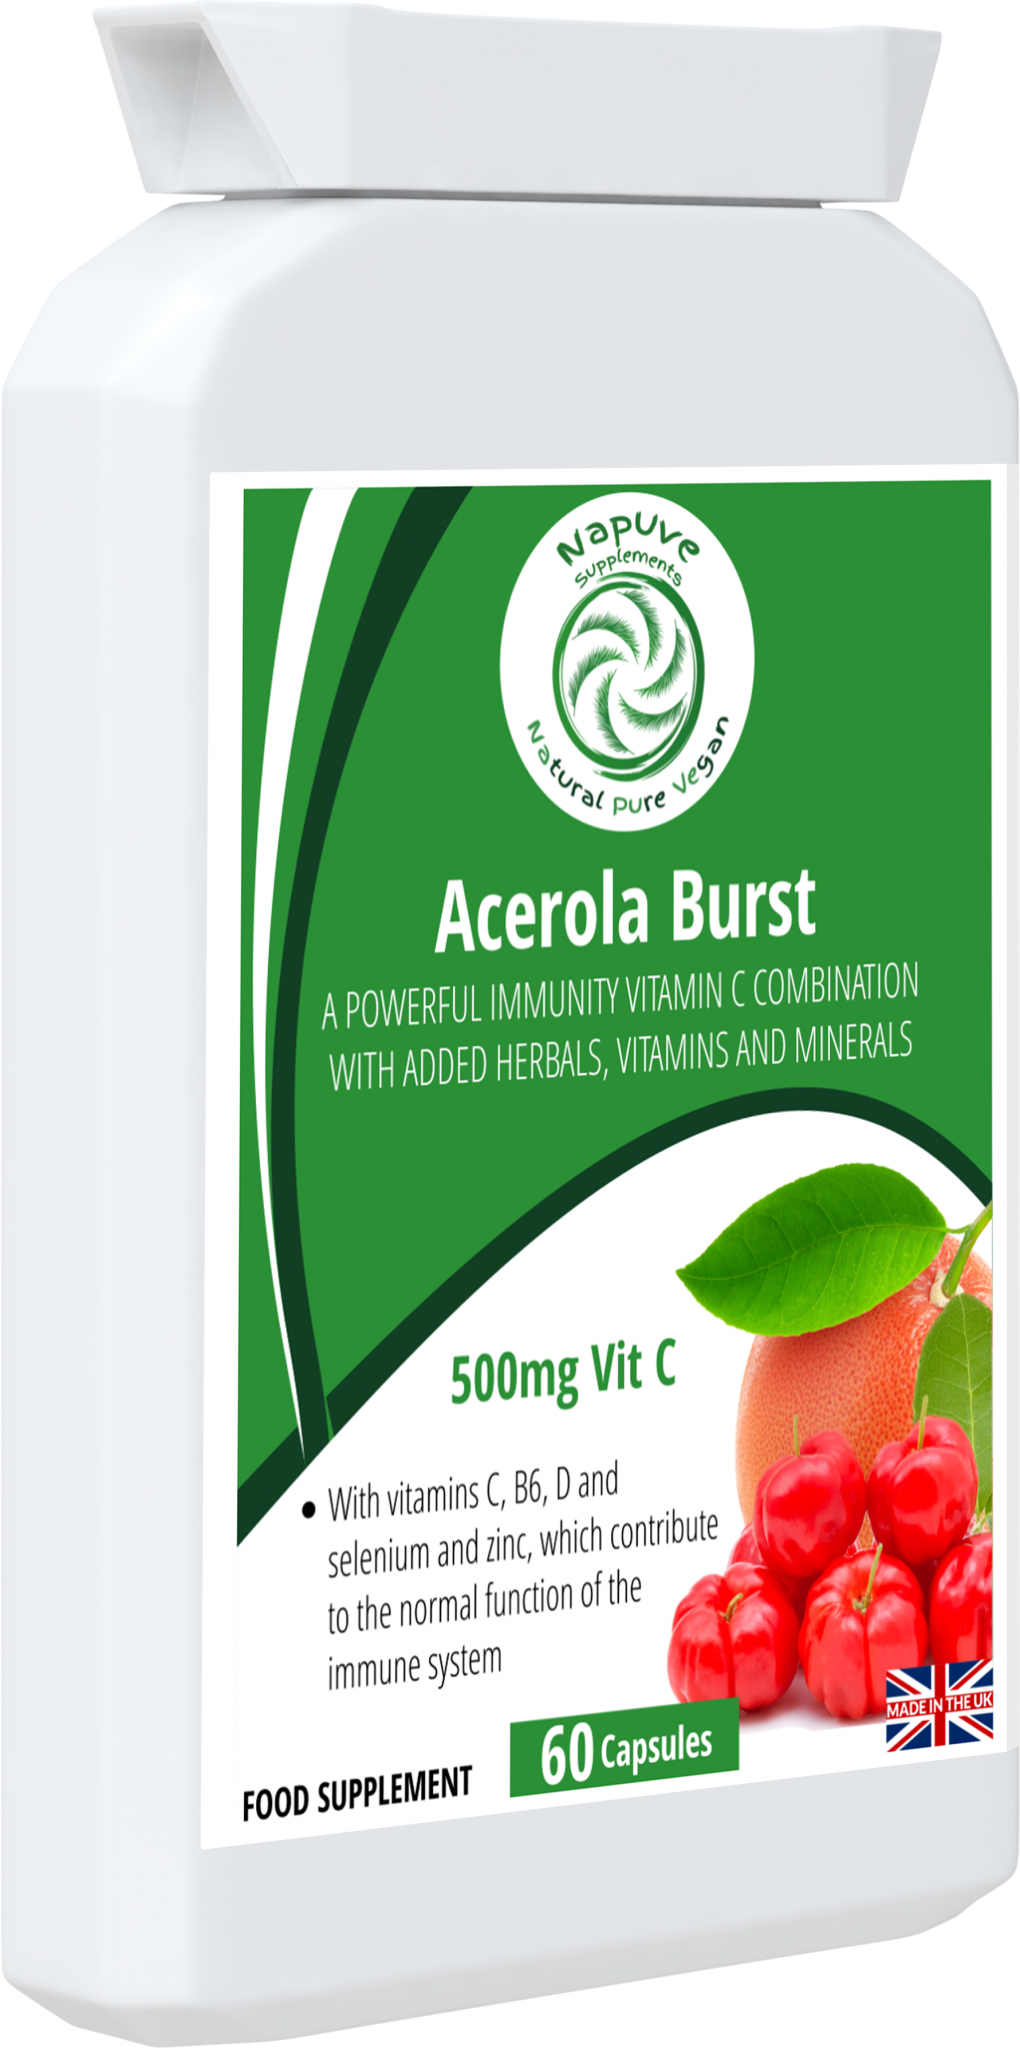 Acerola Burst – Acerola Cherry Extract